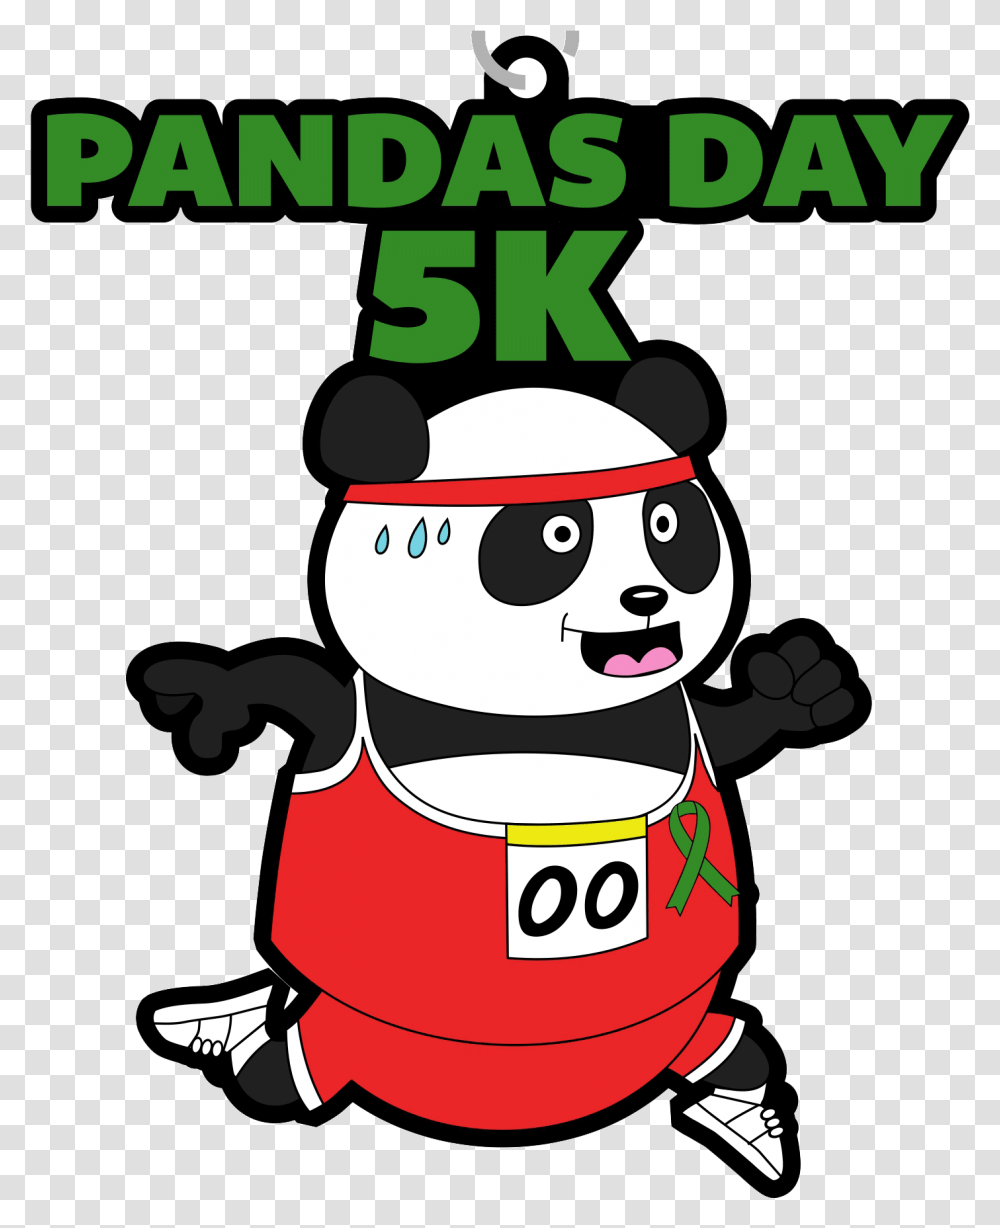 Pandas Day 5k Cartoon, Label, Advertisement, Poster Transparent Png